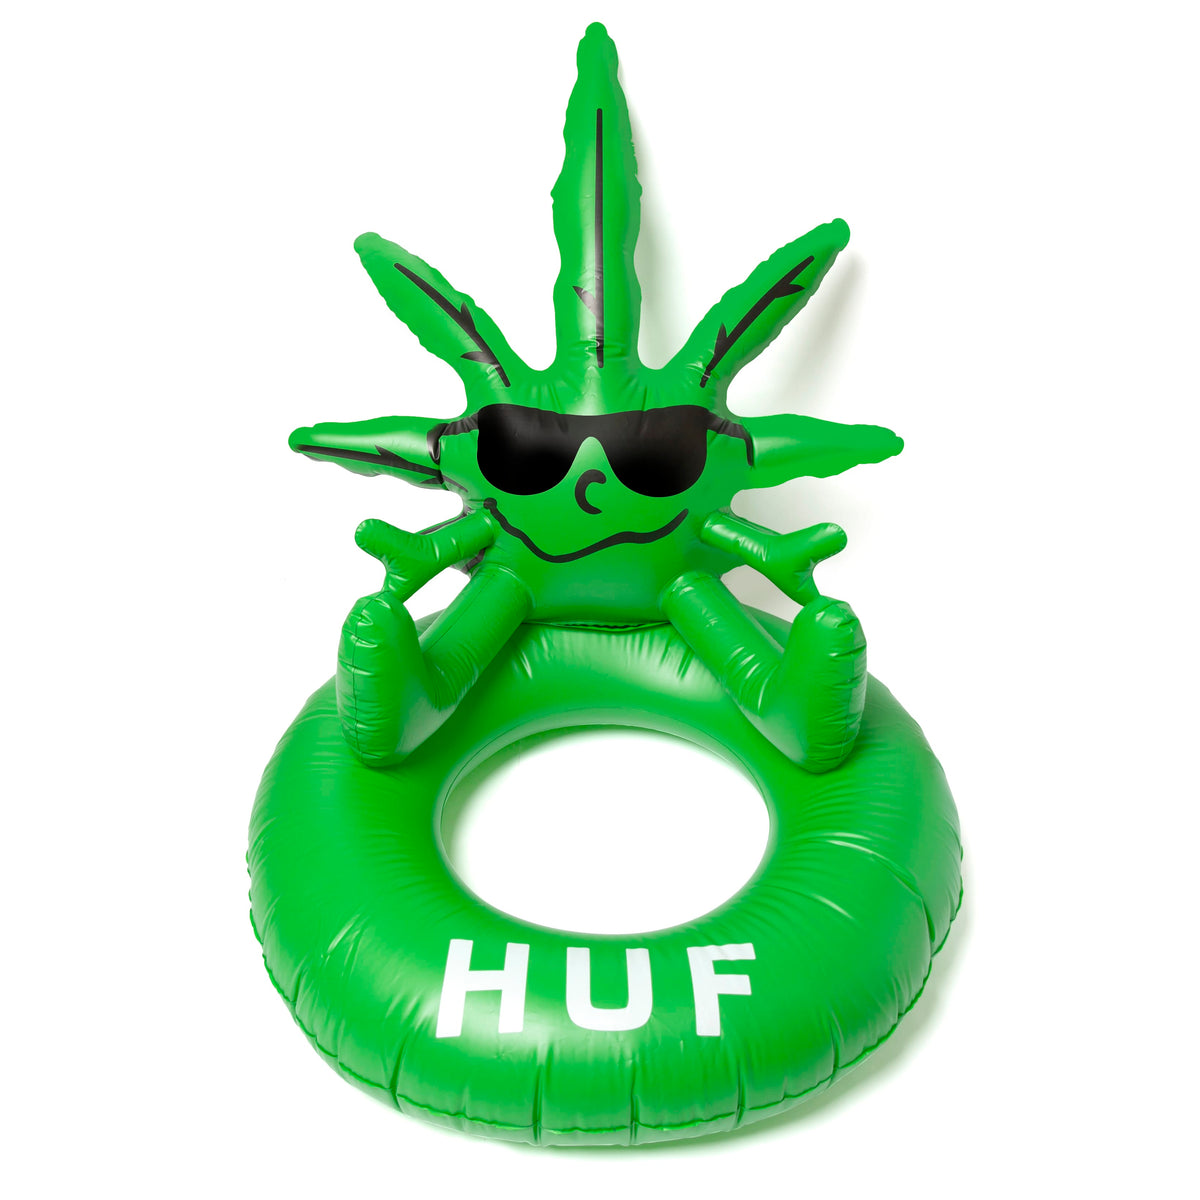 Huf Green Buddy Pool Floatie - Green